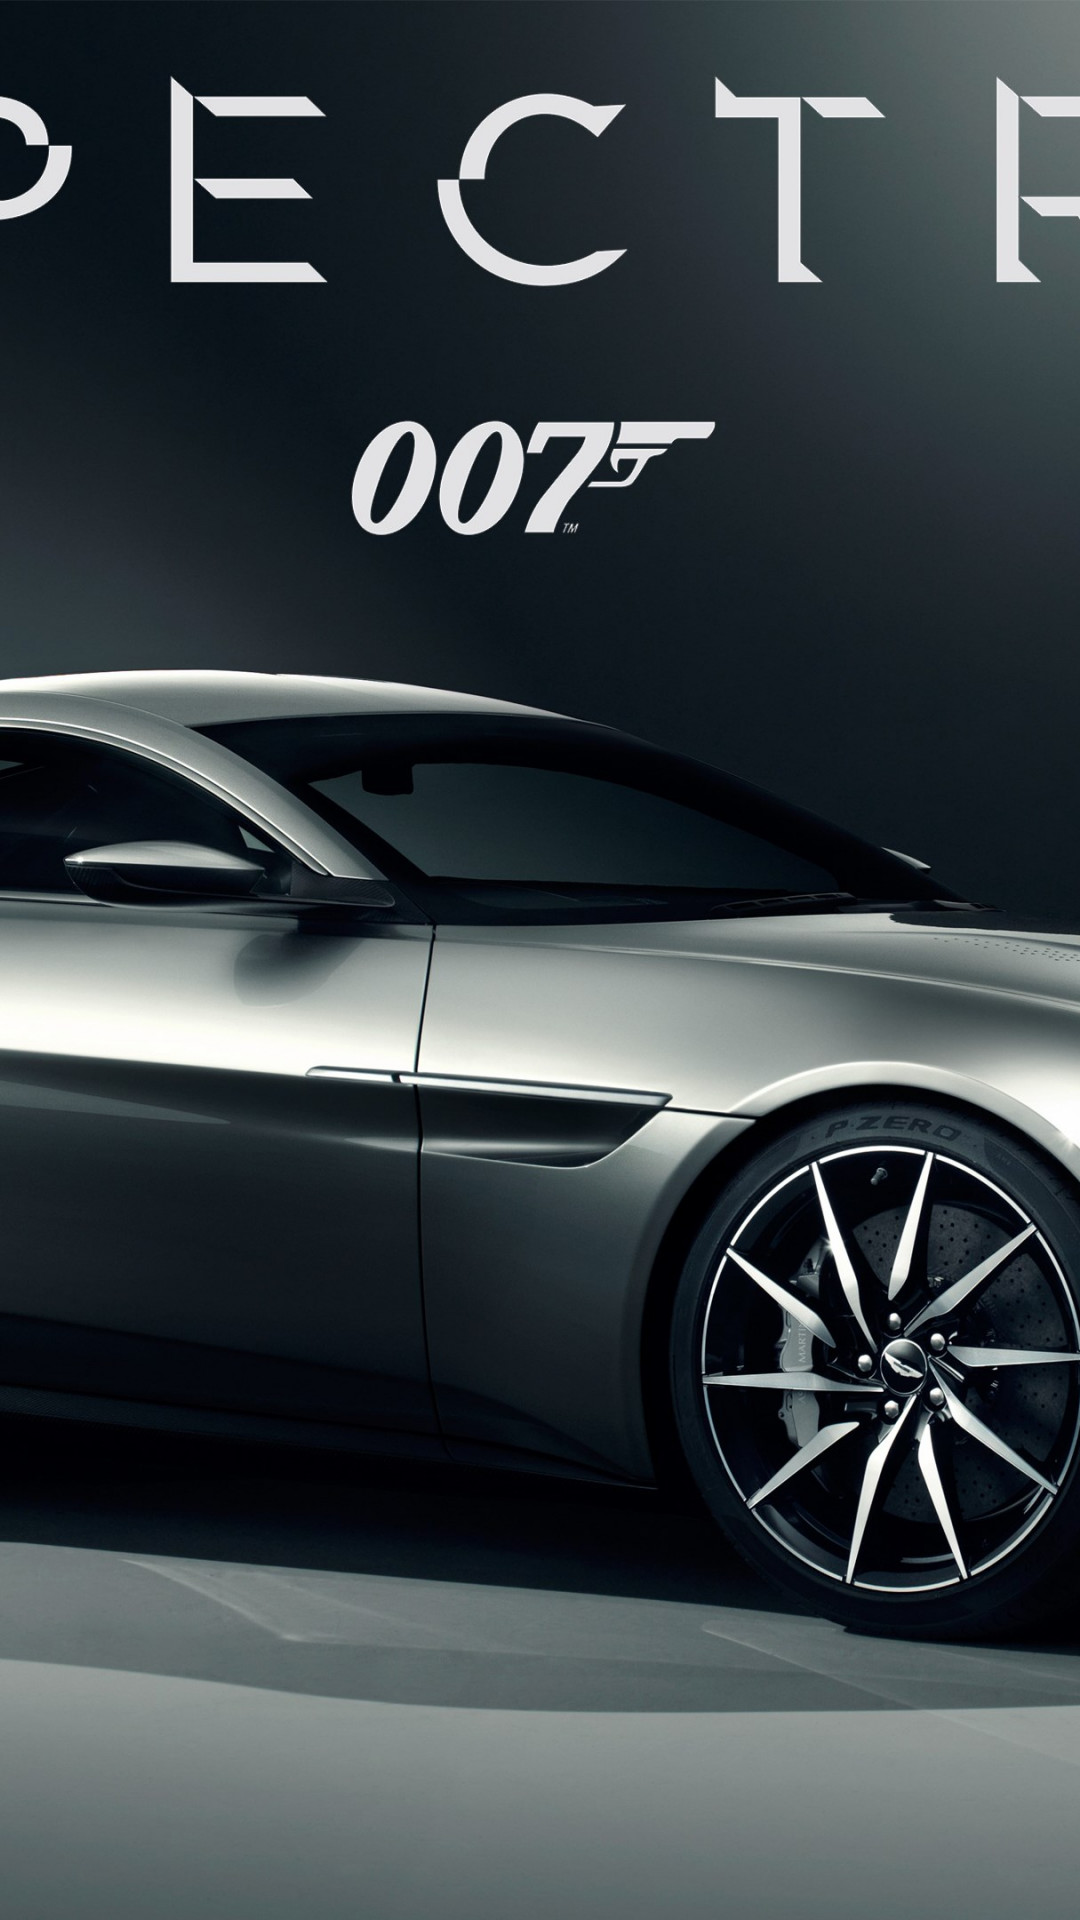 Aston Martin Db10 007 Spectre Car Wallpaper James Bond Daniel Craig Cars 1080x19 Wallpaper Teahub Io